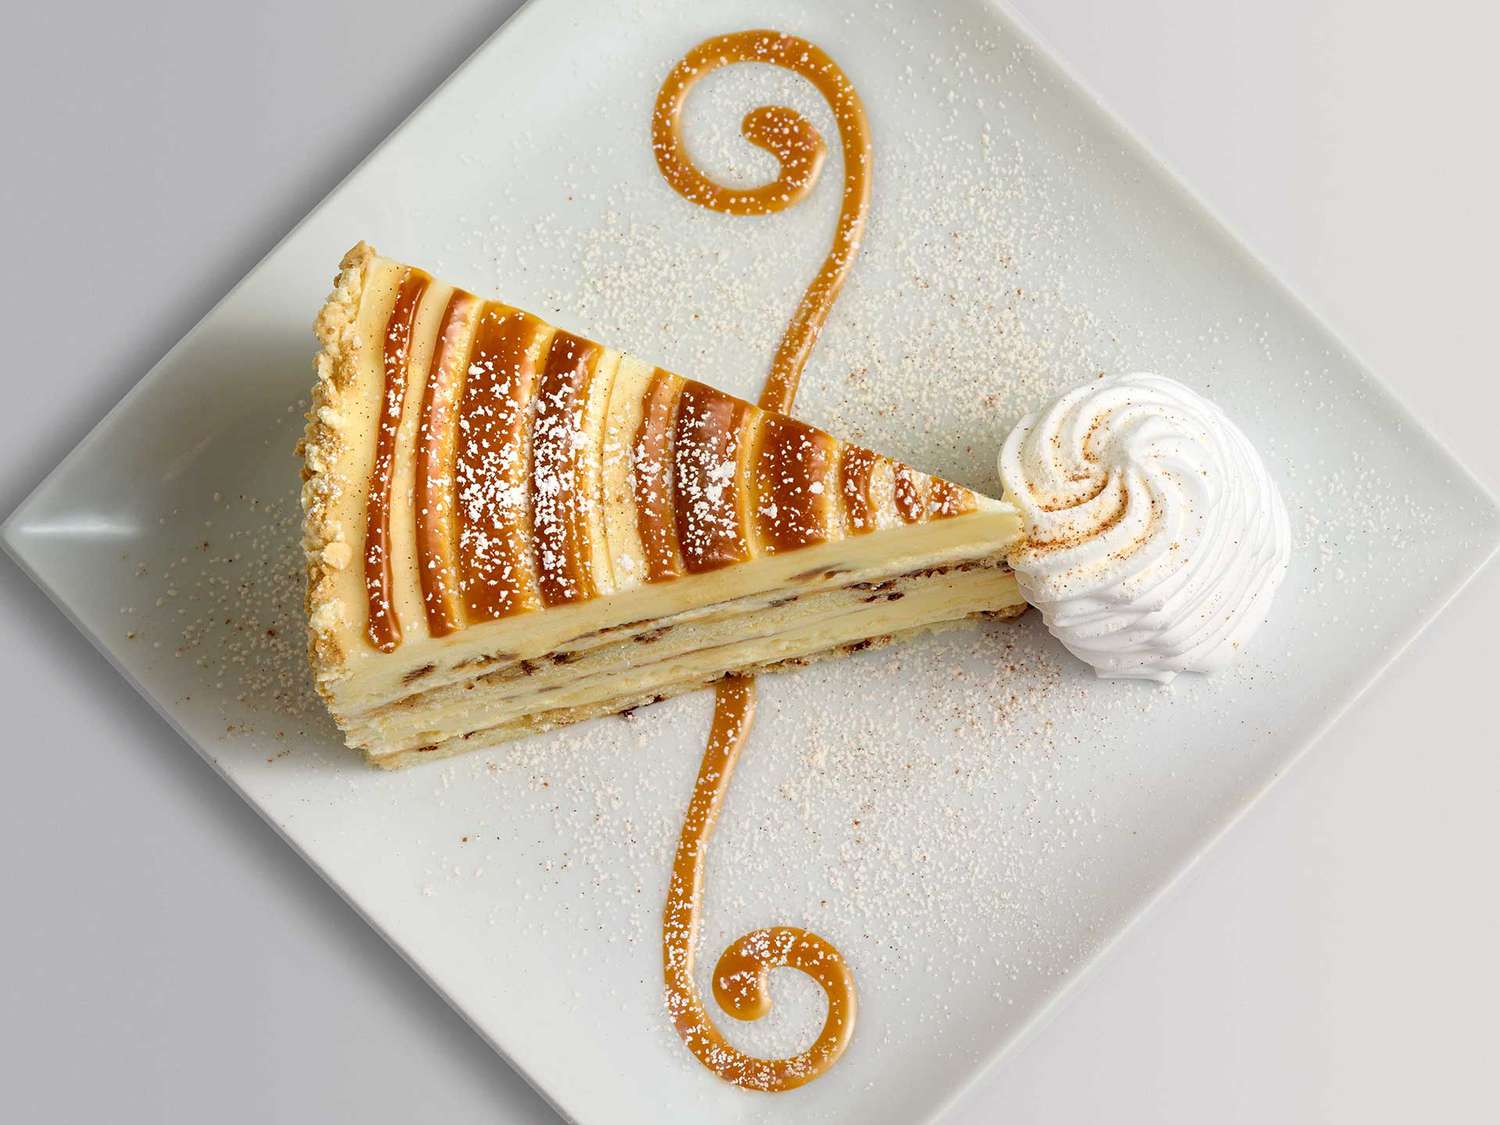 Slice of Cheesecake Factory Cinnabon Cinnamon Swirl Cheesecake on a plate with whipped cream